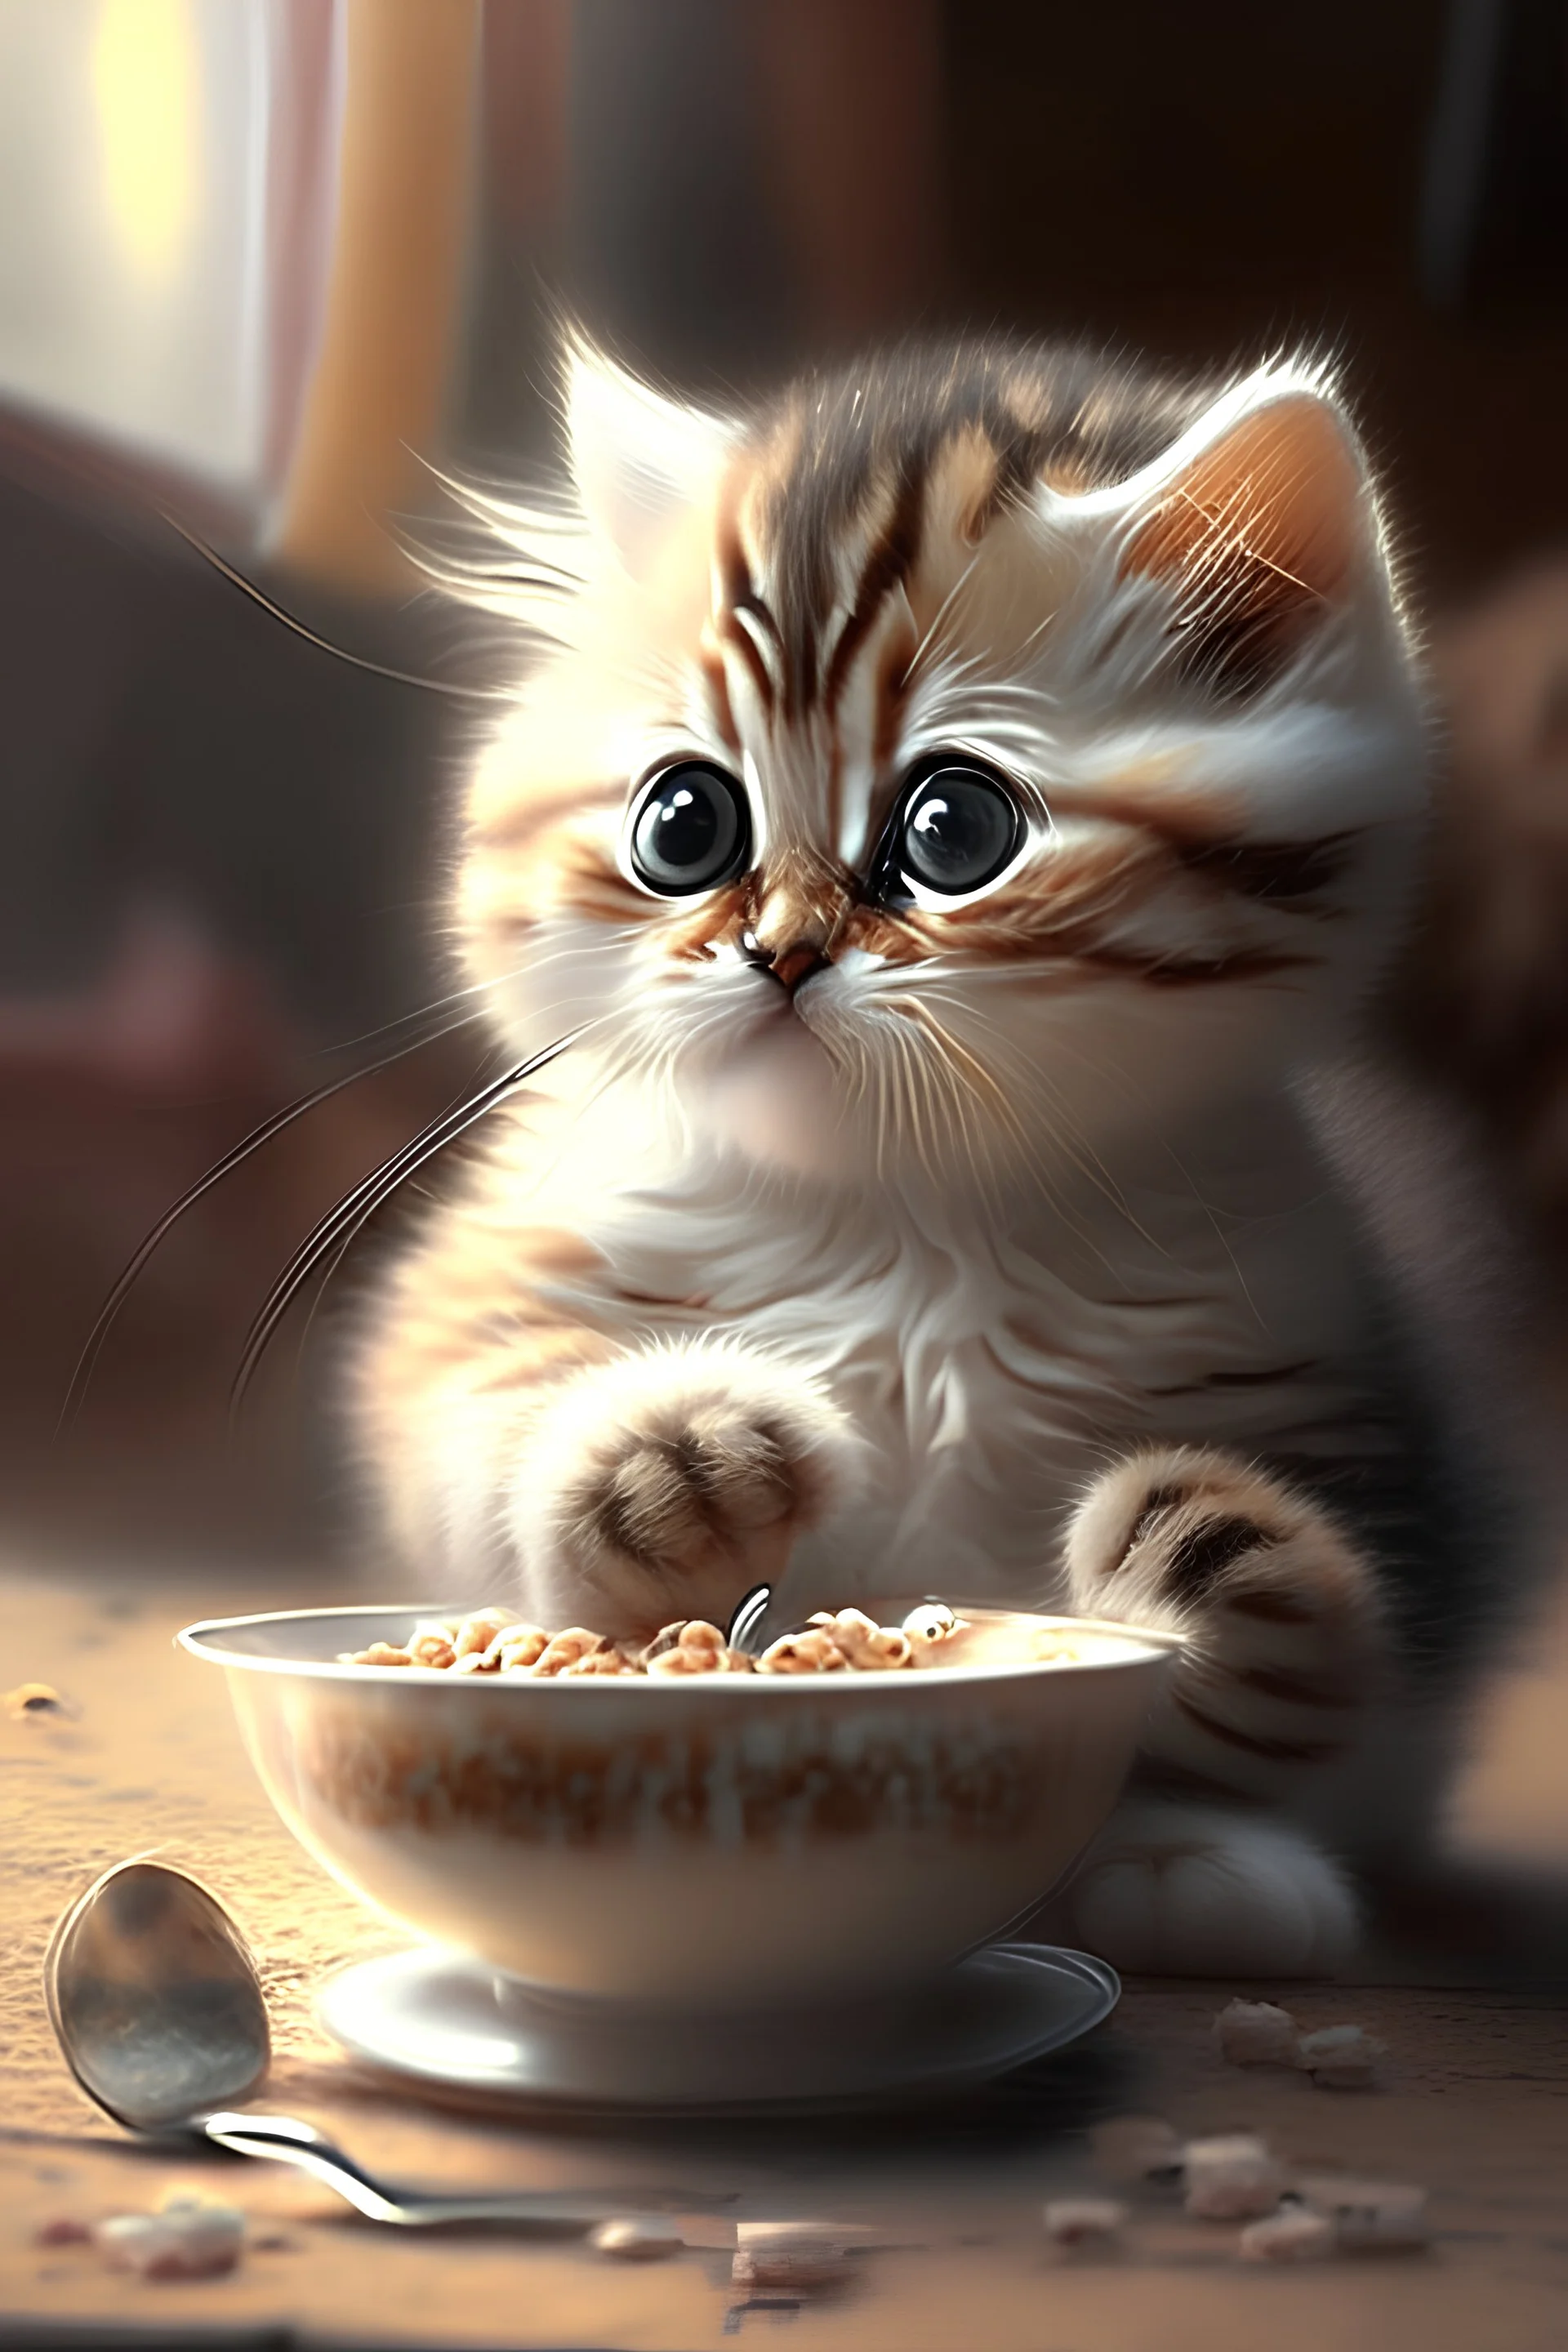 The cute cat eating